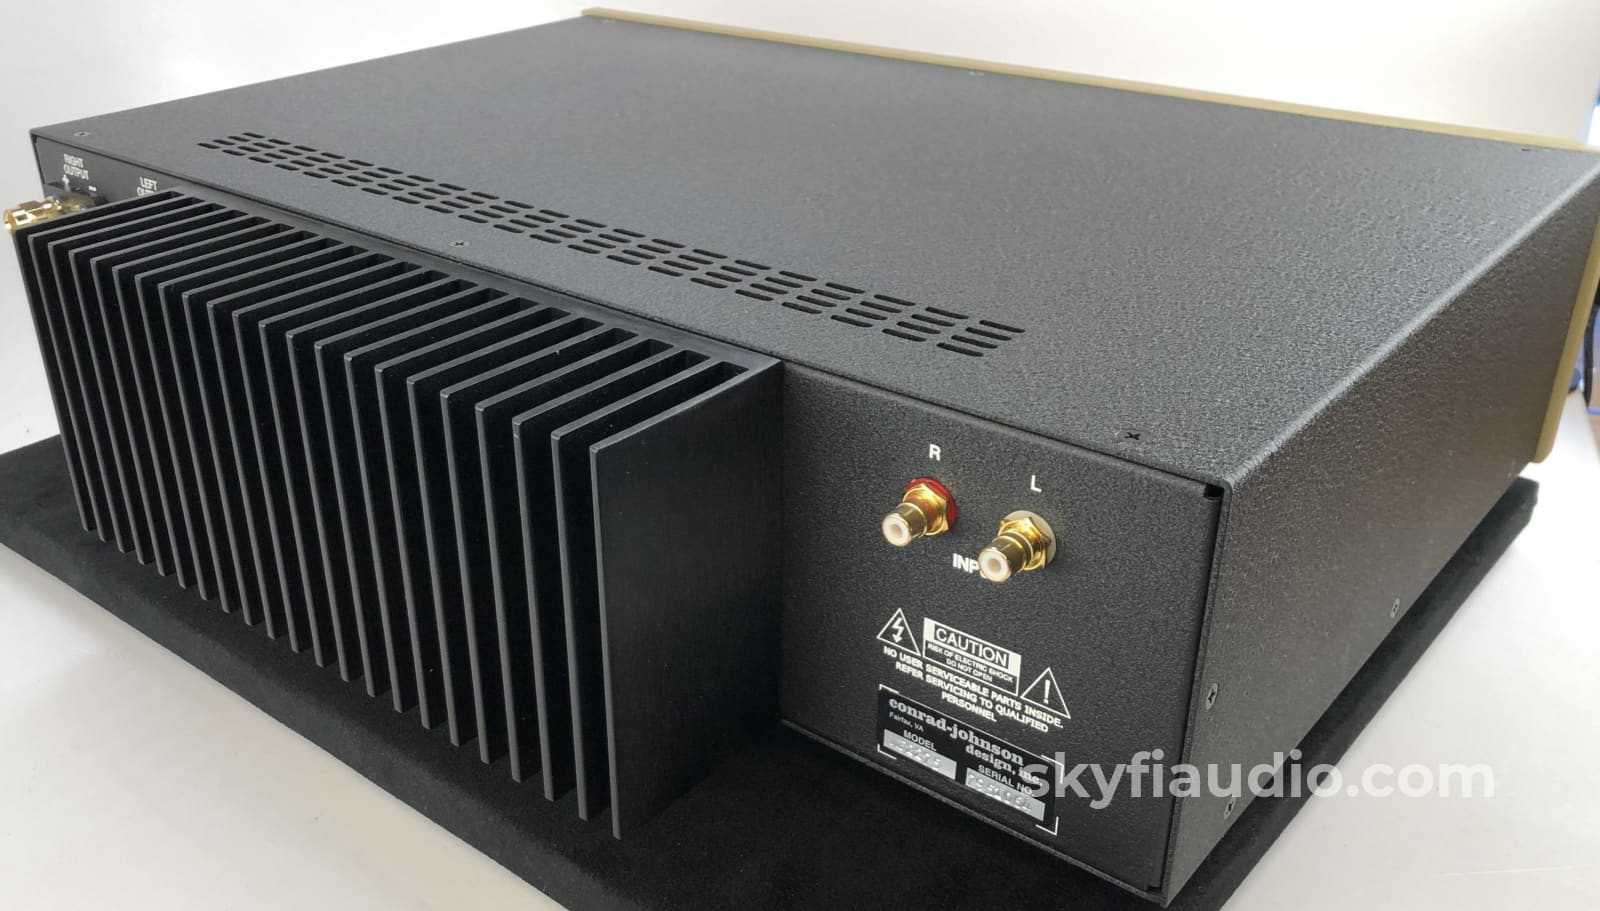 Conrad-Johnson Mf2275 Solid State Amplifier - Like New In Box